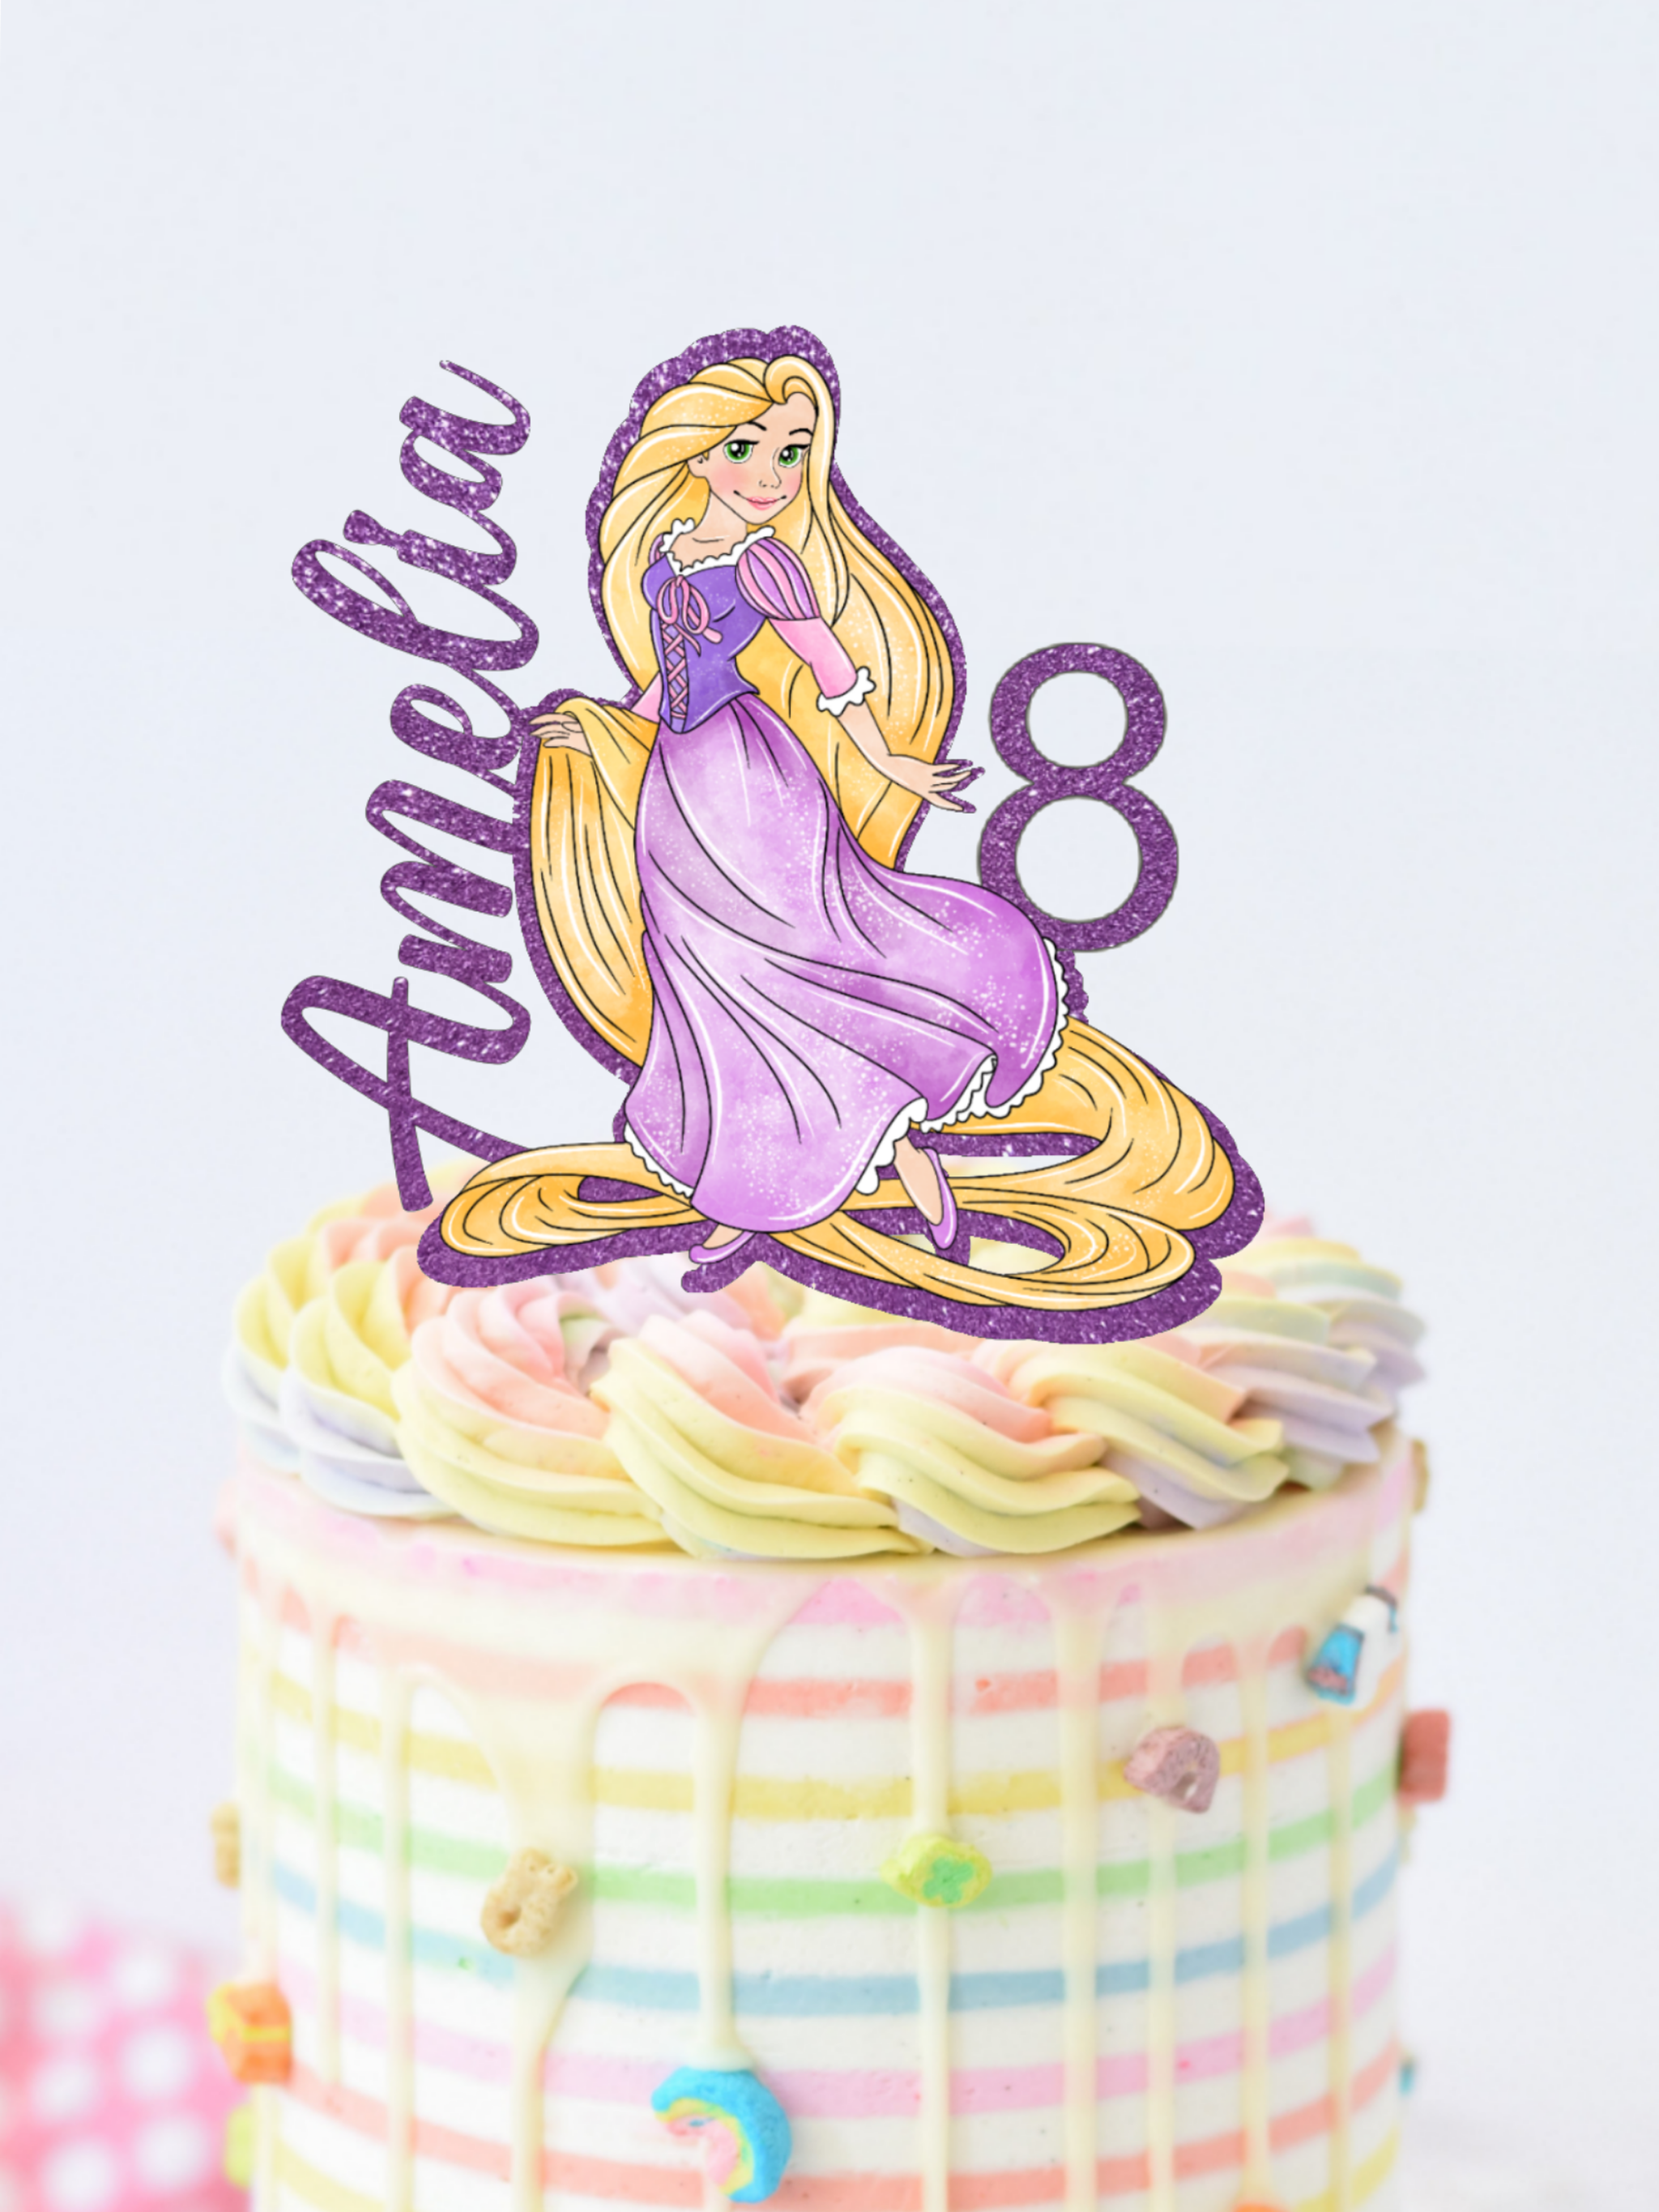 Rapunzel Cake Singapore/Princesses Cakes Singapore - River Ash Bakery